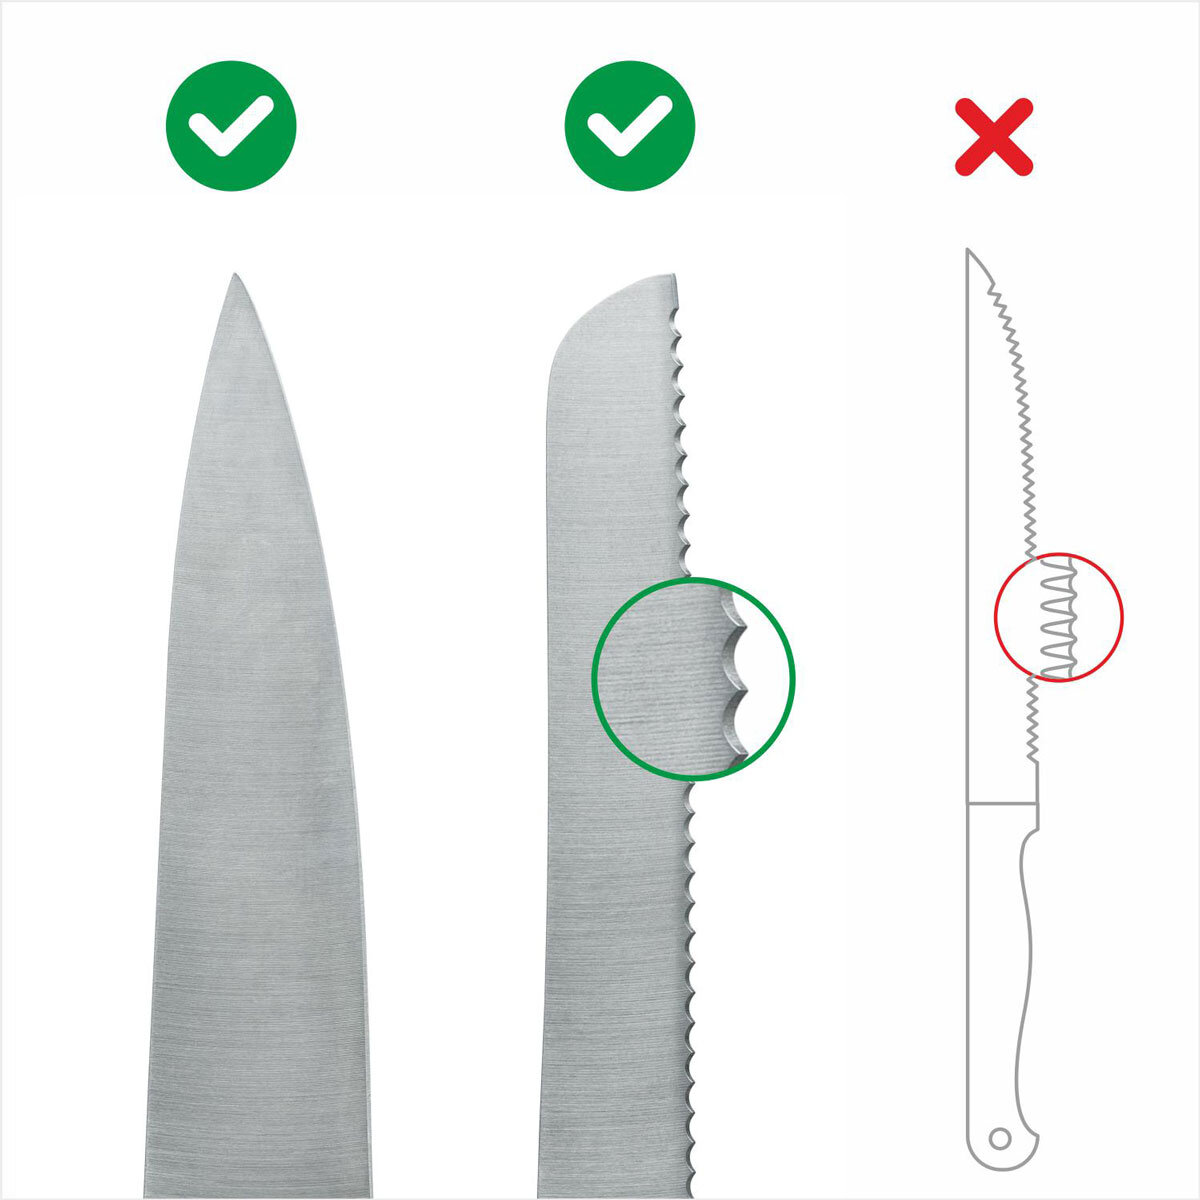 Anysharp Pro Metal Knife Sharpener with Suction